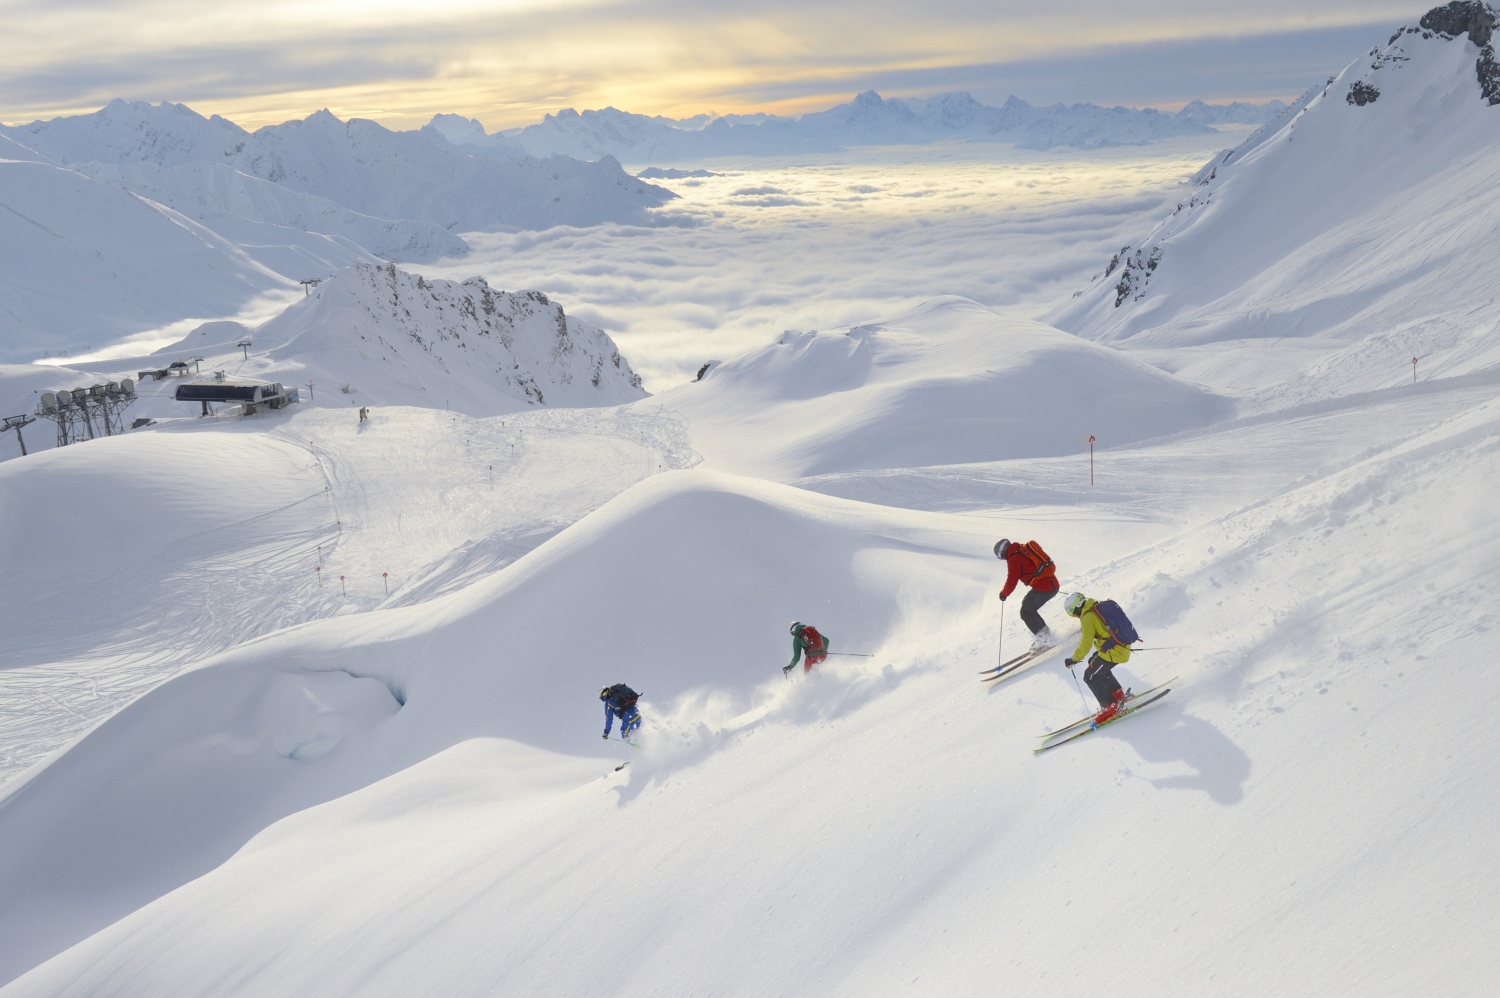 Group of people skiing down fresh snow in mountains - St Anton, Austria